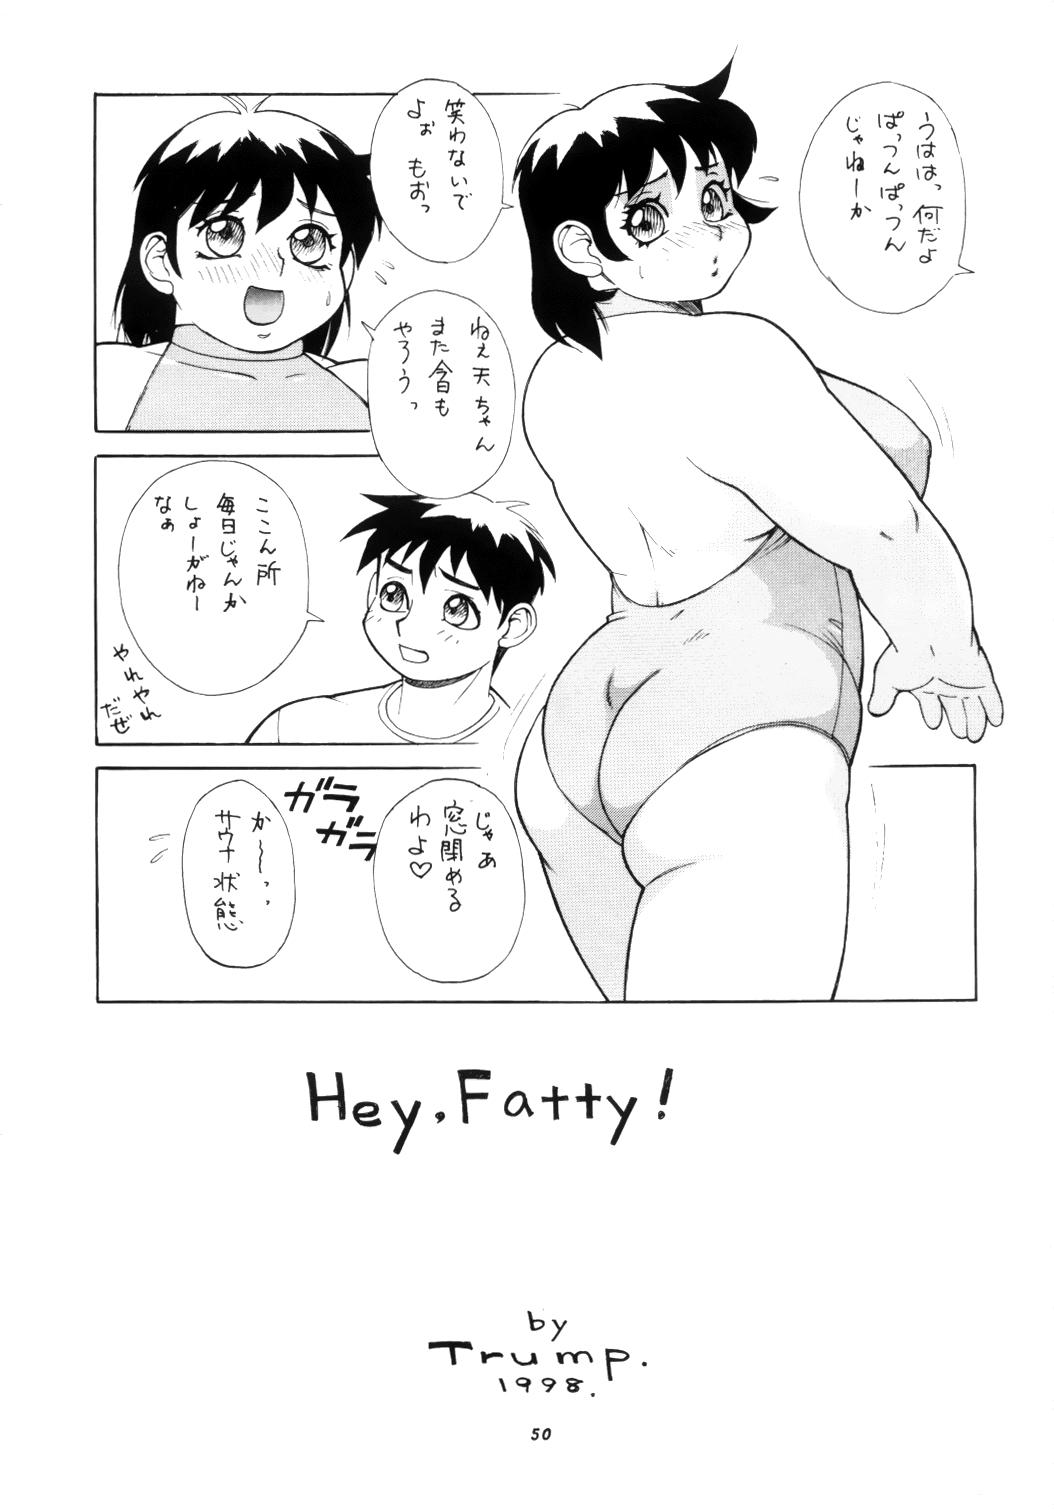 Hey! Fatty 1